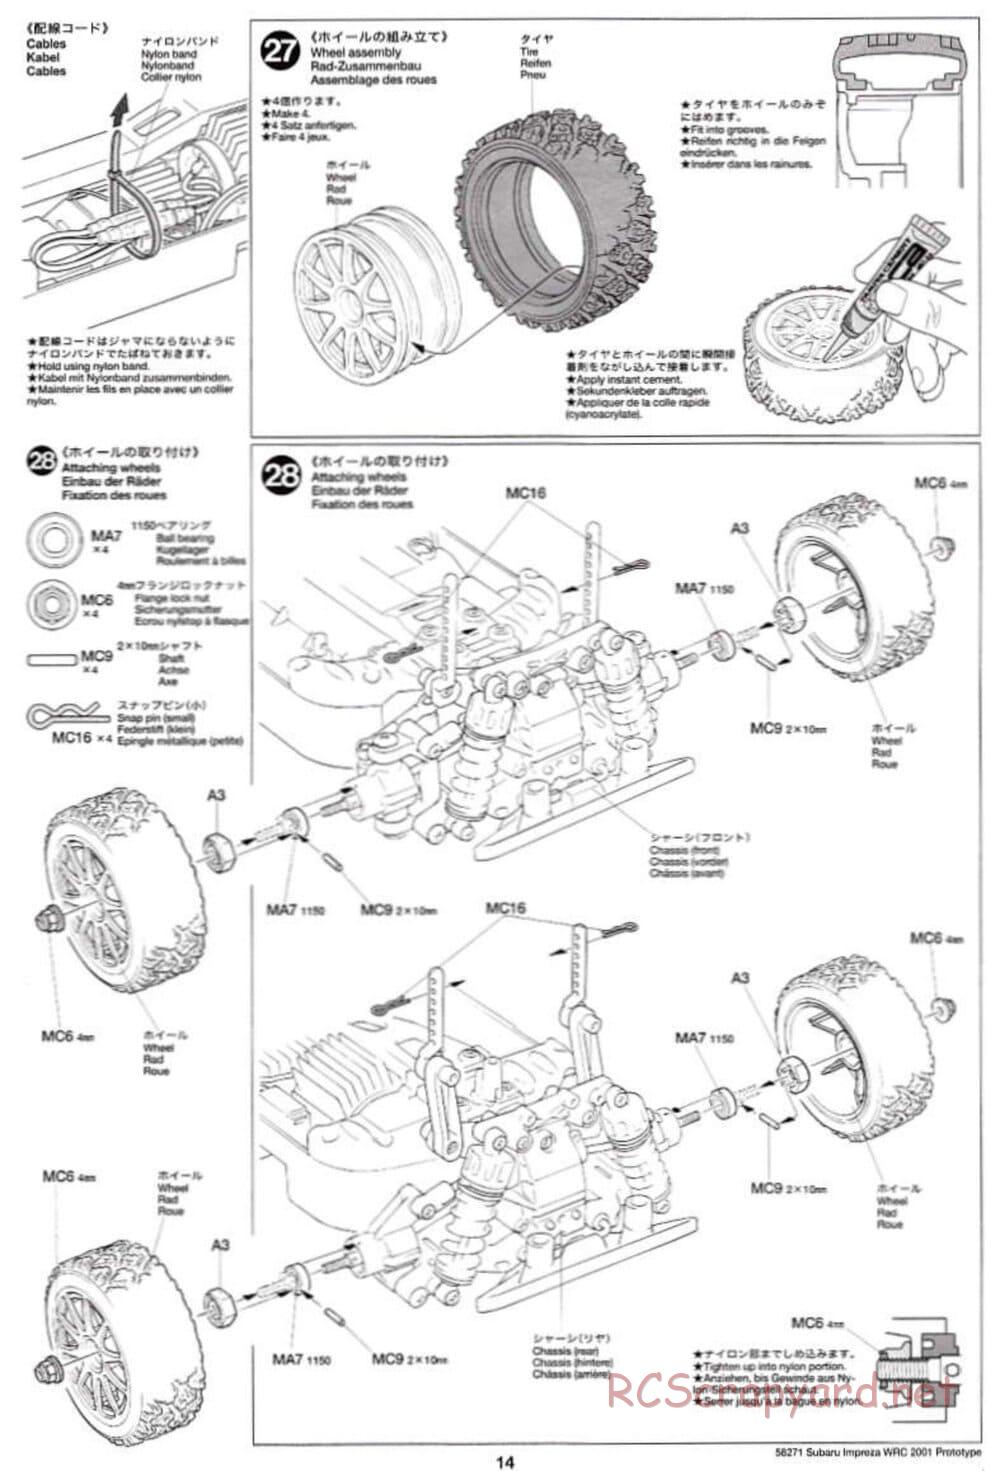 Tamiya - Subaru Impreza WRC 2001 Prototype - TB-01 Chassis - Manual - Page 14